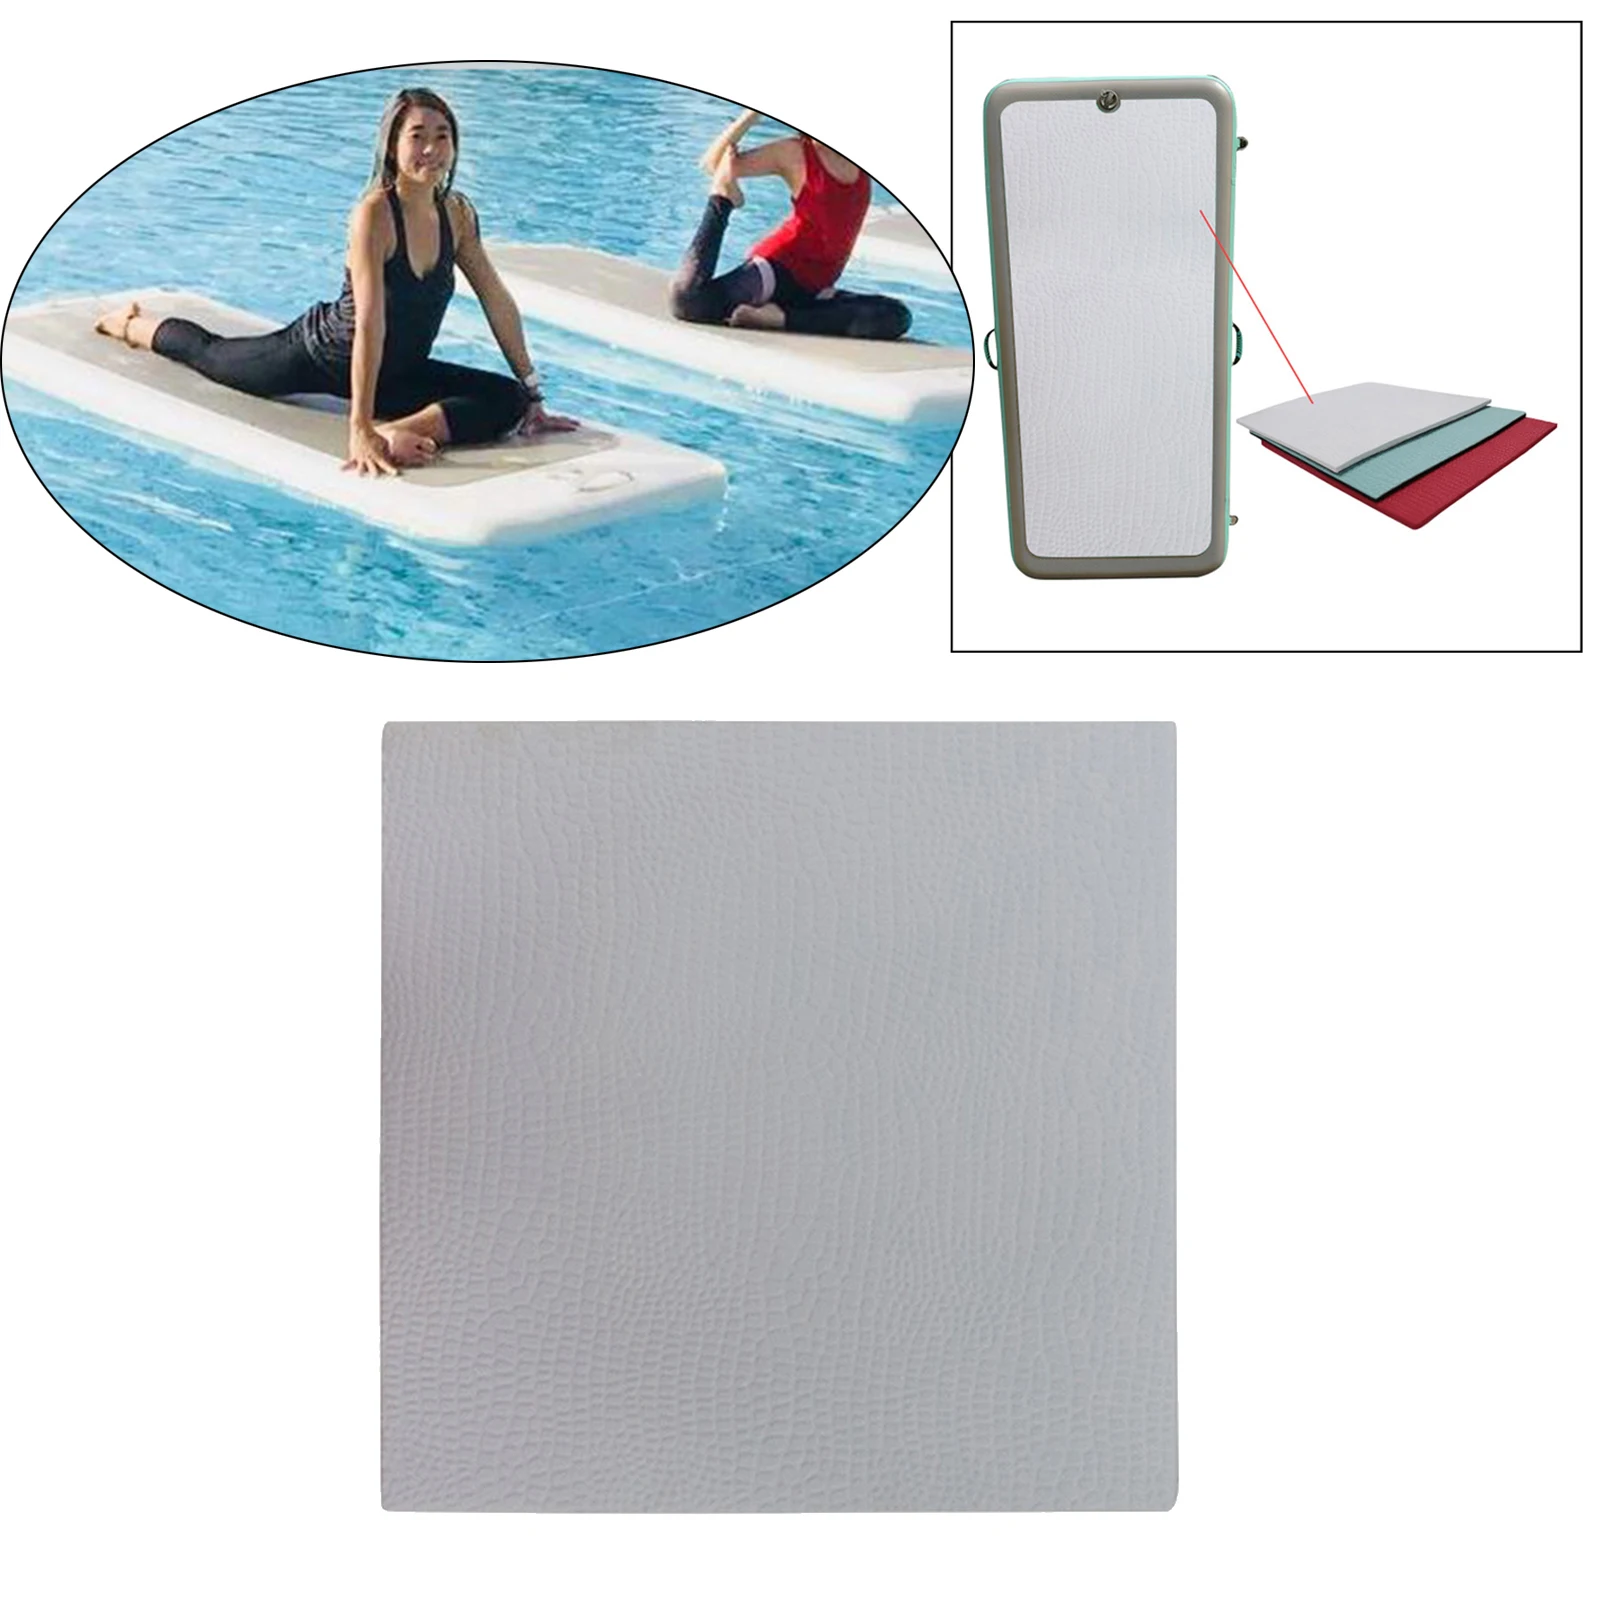 Tumbling Mat Floating Yoga Mat for Water Beach Yoga Taekwondo Cheerleading